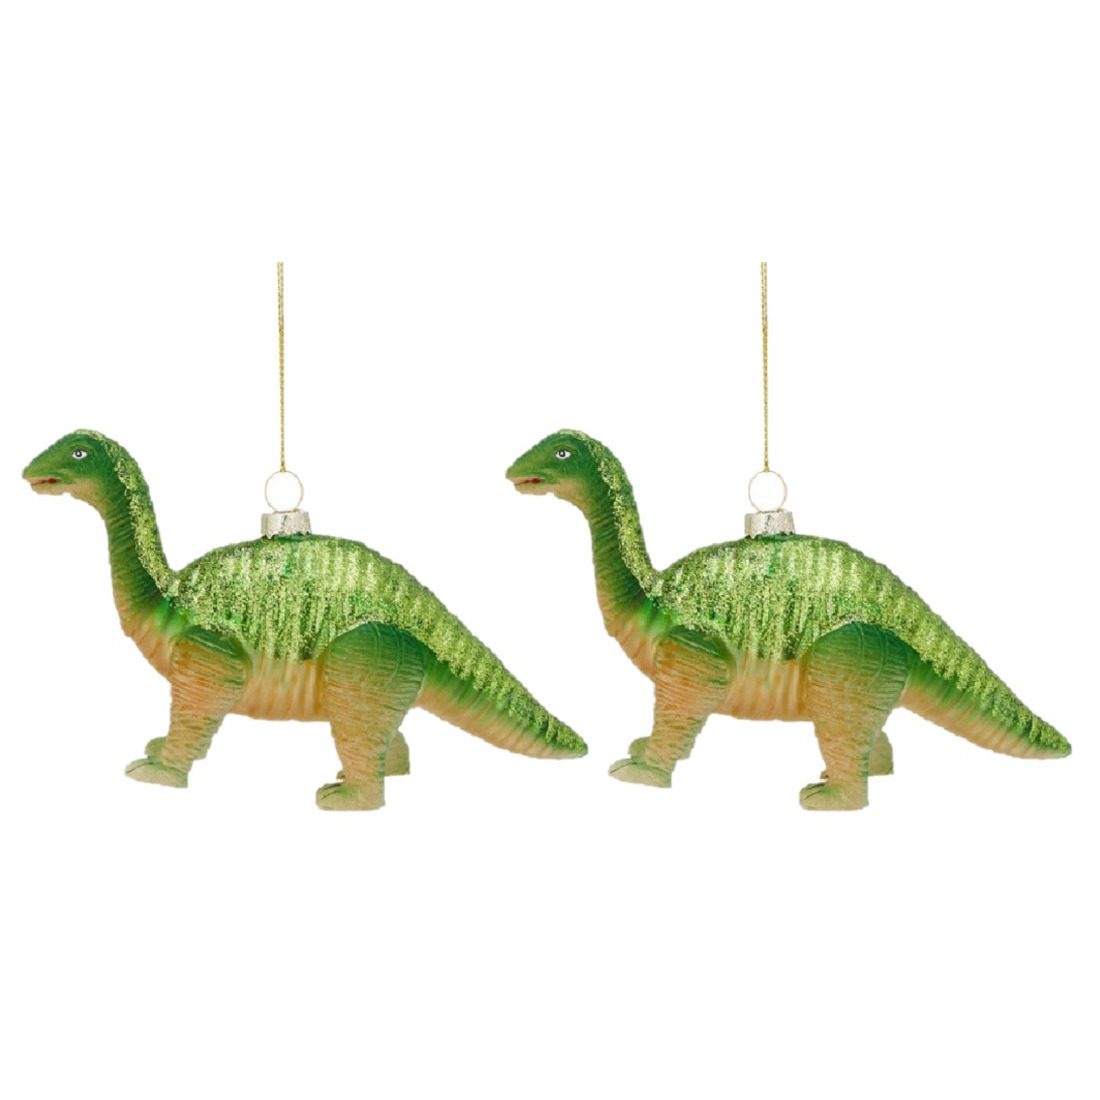 2x Kersthanger figuurtjes glazen dinosaurus groen 16 cm